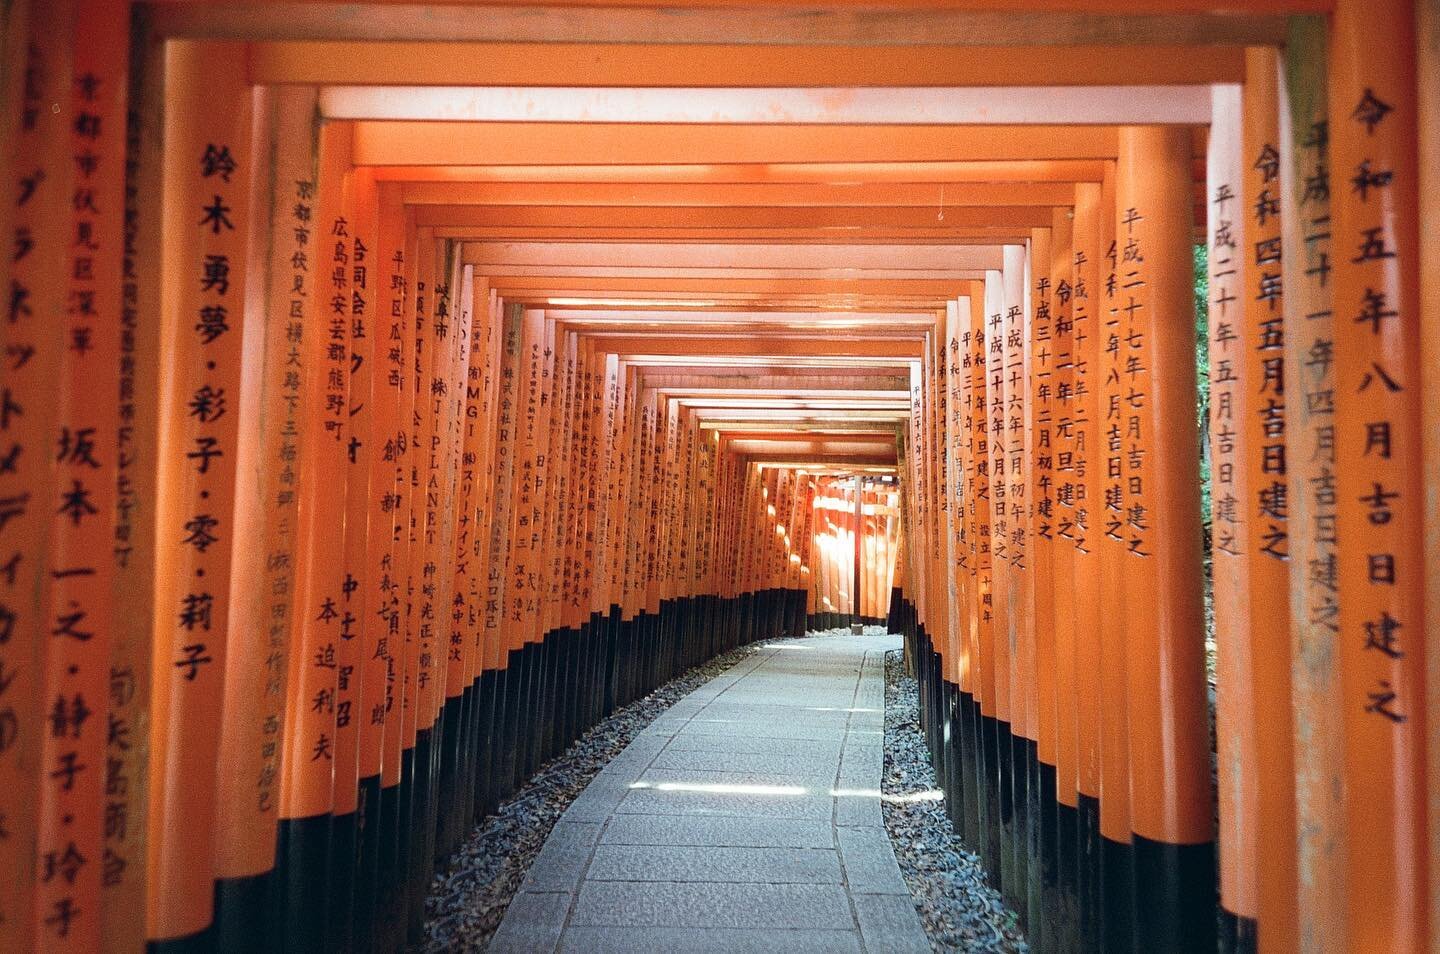 Some Japan on film snaps (wide edit)
1. 1000 torii gates
2. Protectors
3. A study on passage ways
4. Kyoto gratitude
5. Sake x sake
6. Osaka castle
7. Lookout
8. Biiig crab friend
9. Omw (Yayoi Kusama)
10. A lil city meets a lil tradition
#filmisnotd